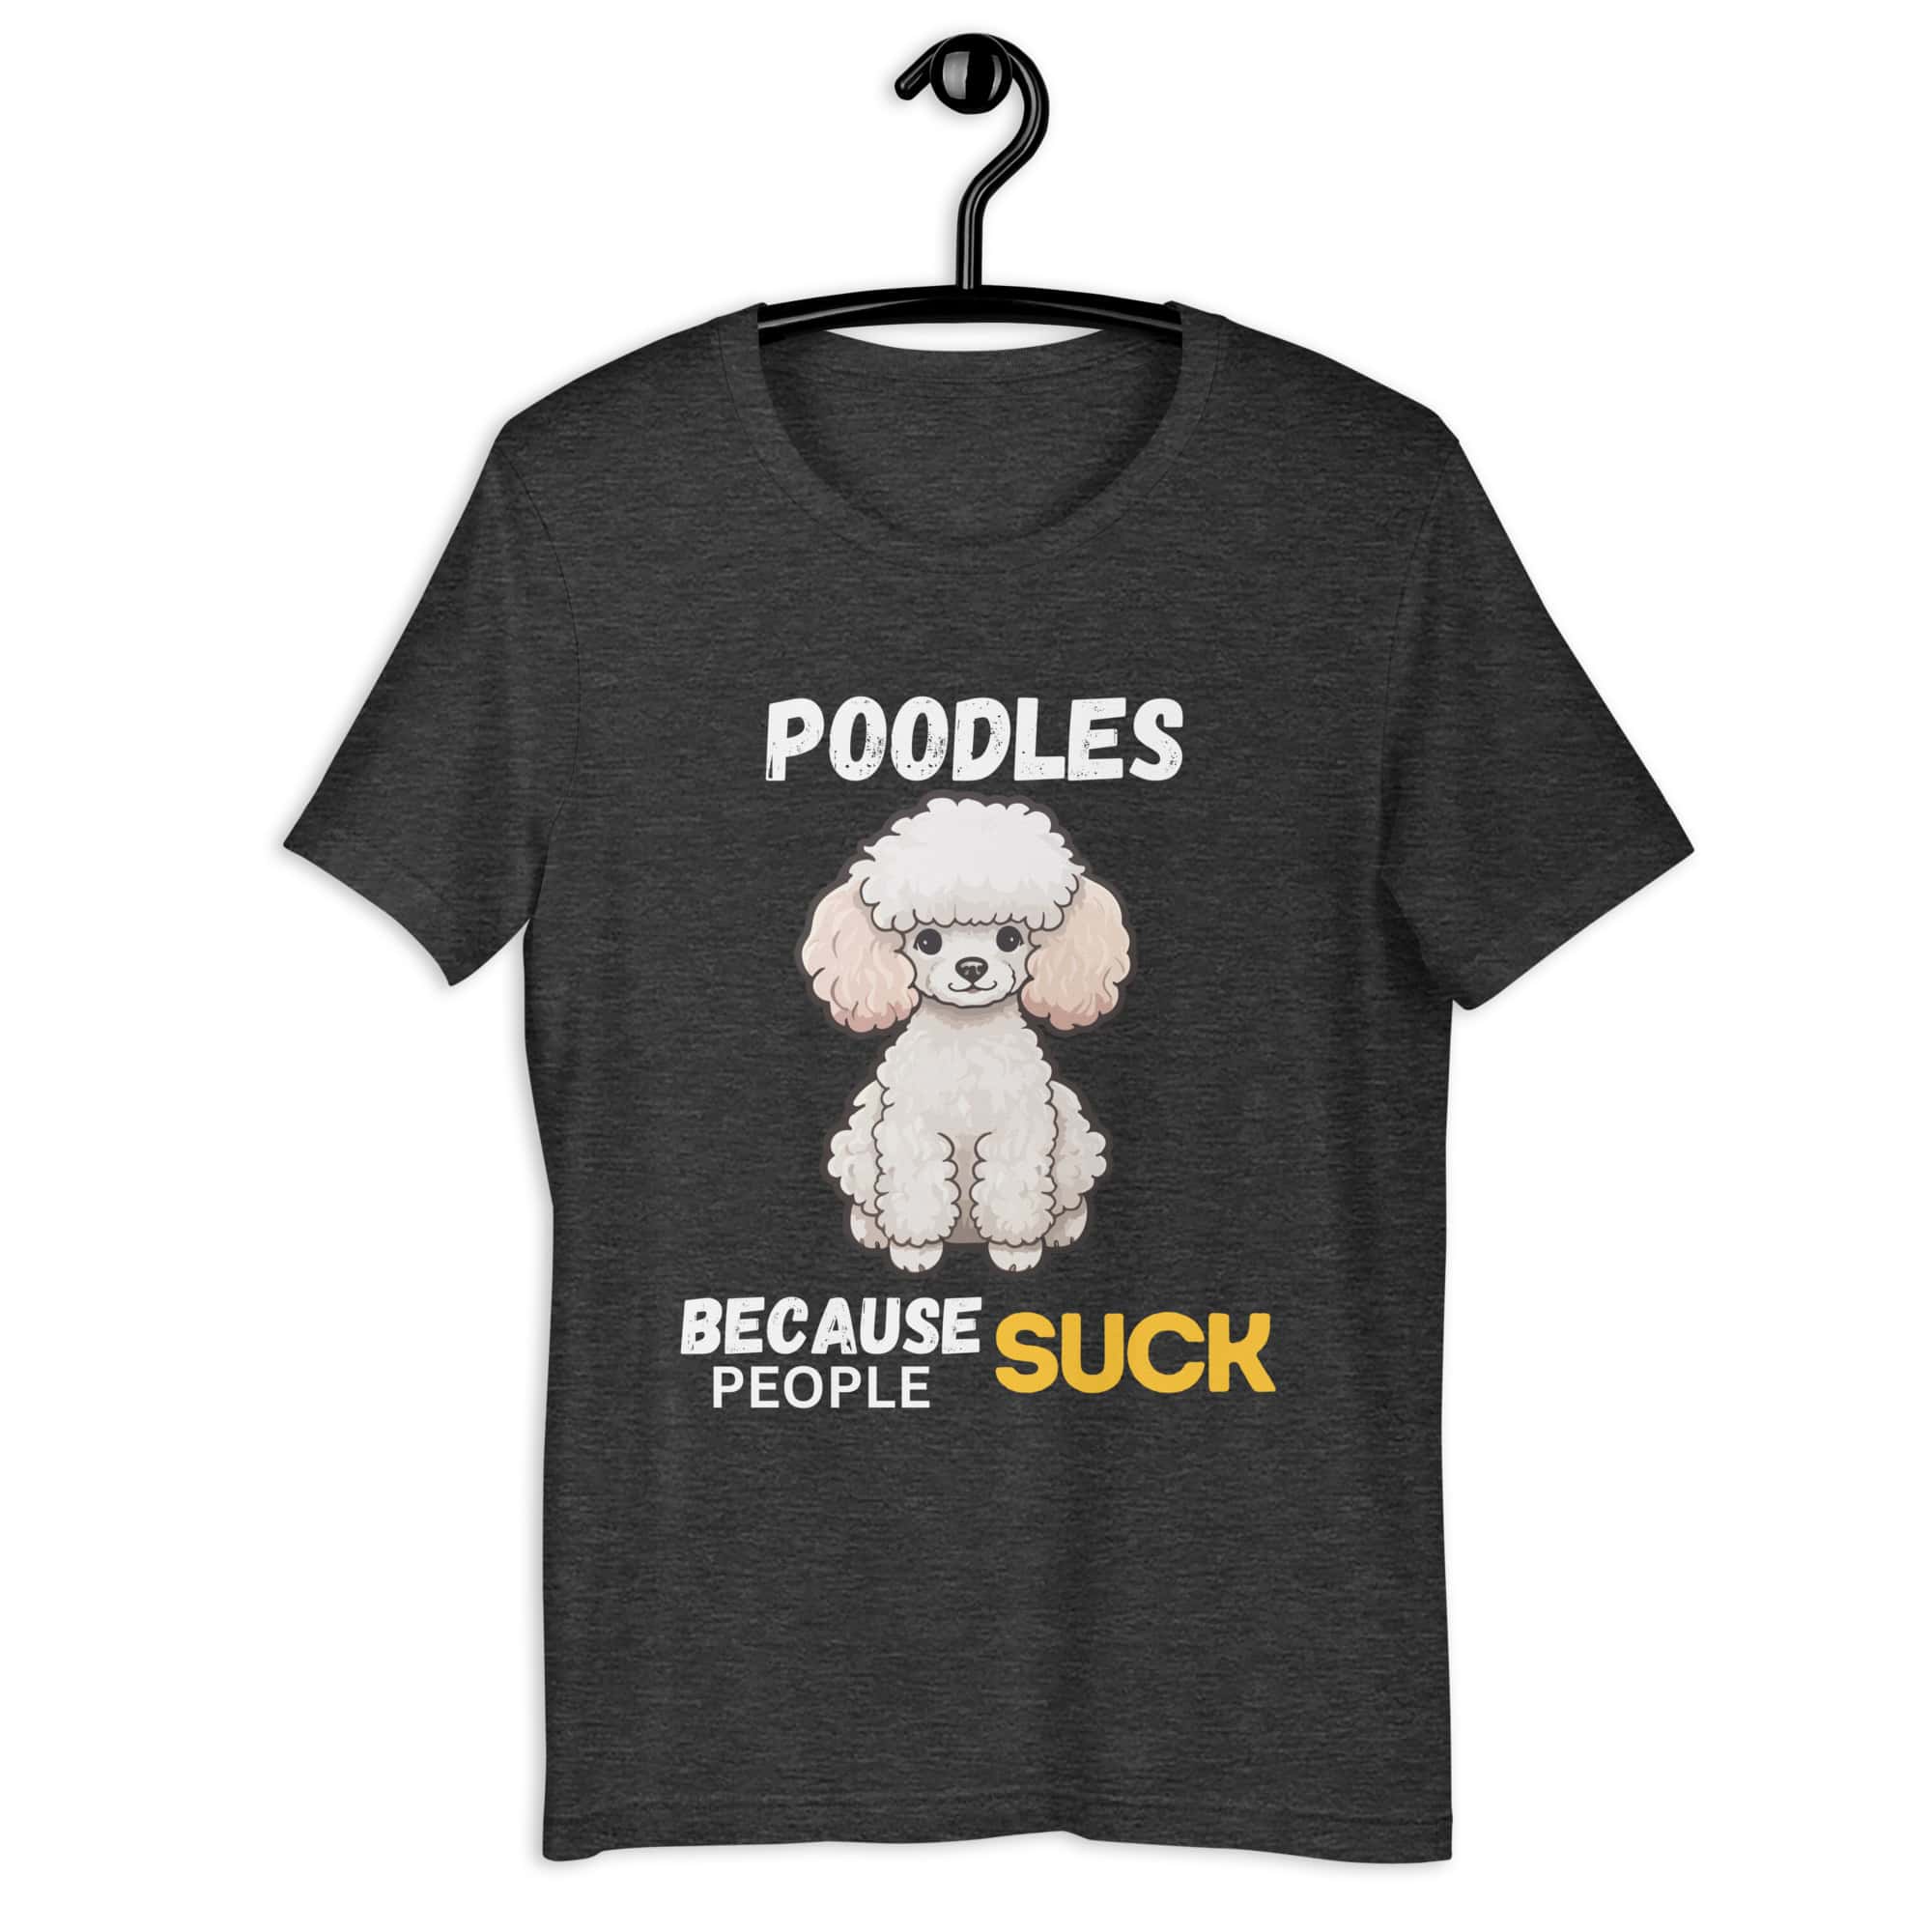 Poodles Because People Suck Unisex T-Shirt matte black